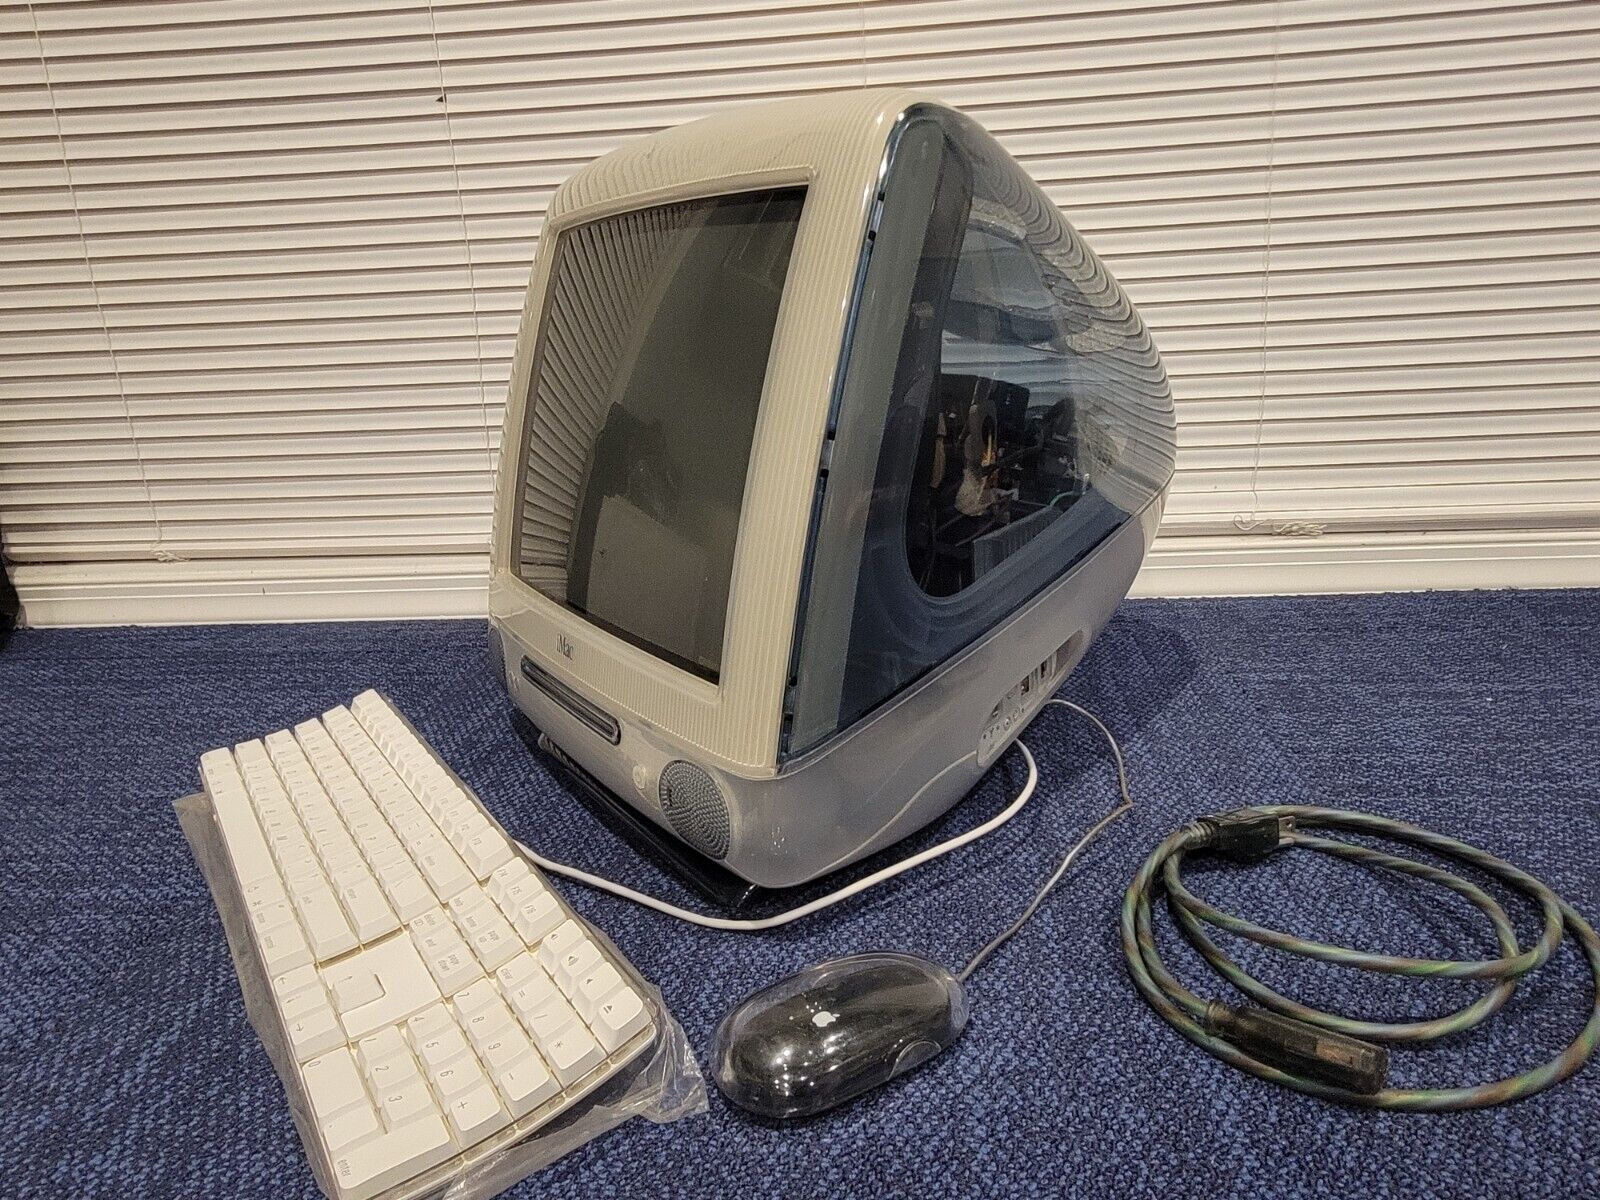 Vintage Apple iMac Blue M5521 CRT PC Mac Macintosh + Keyboard Mouse Power Cable